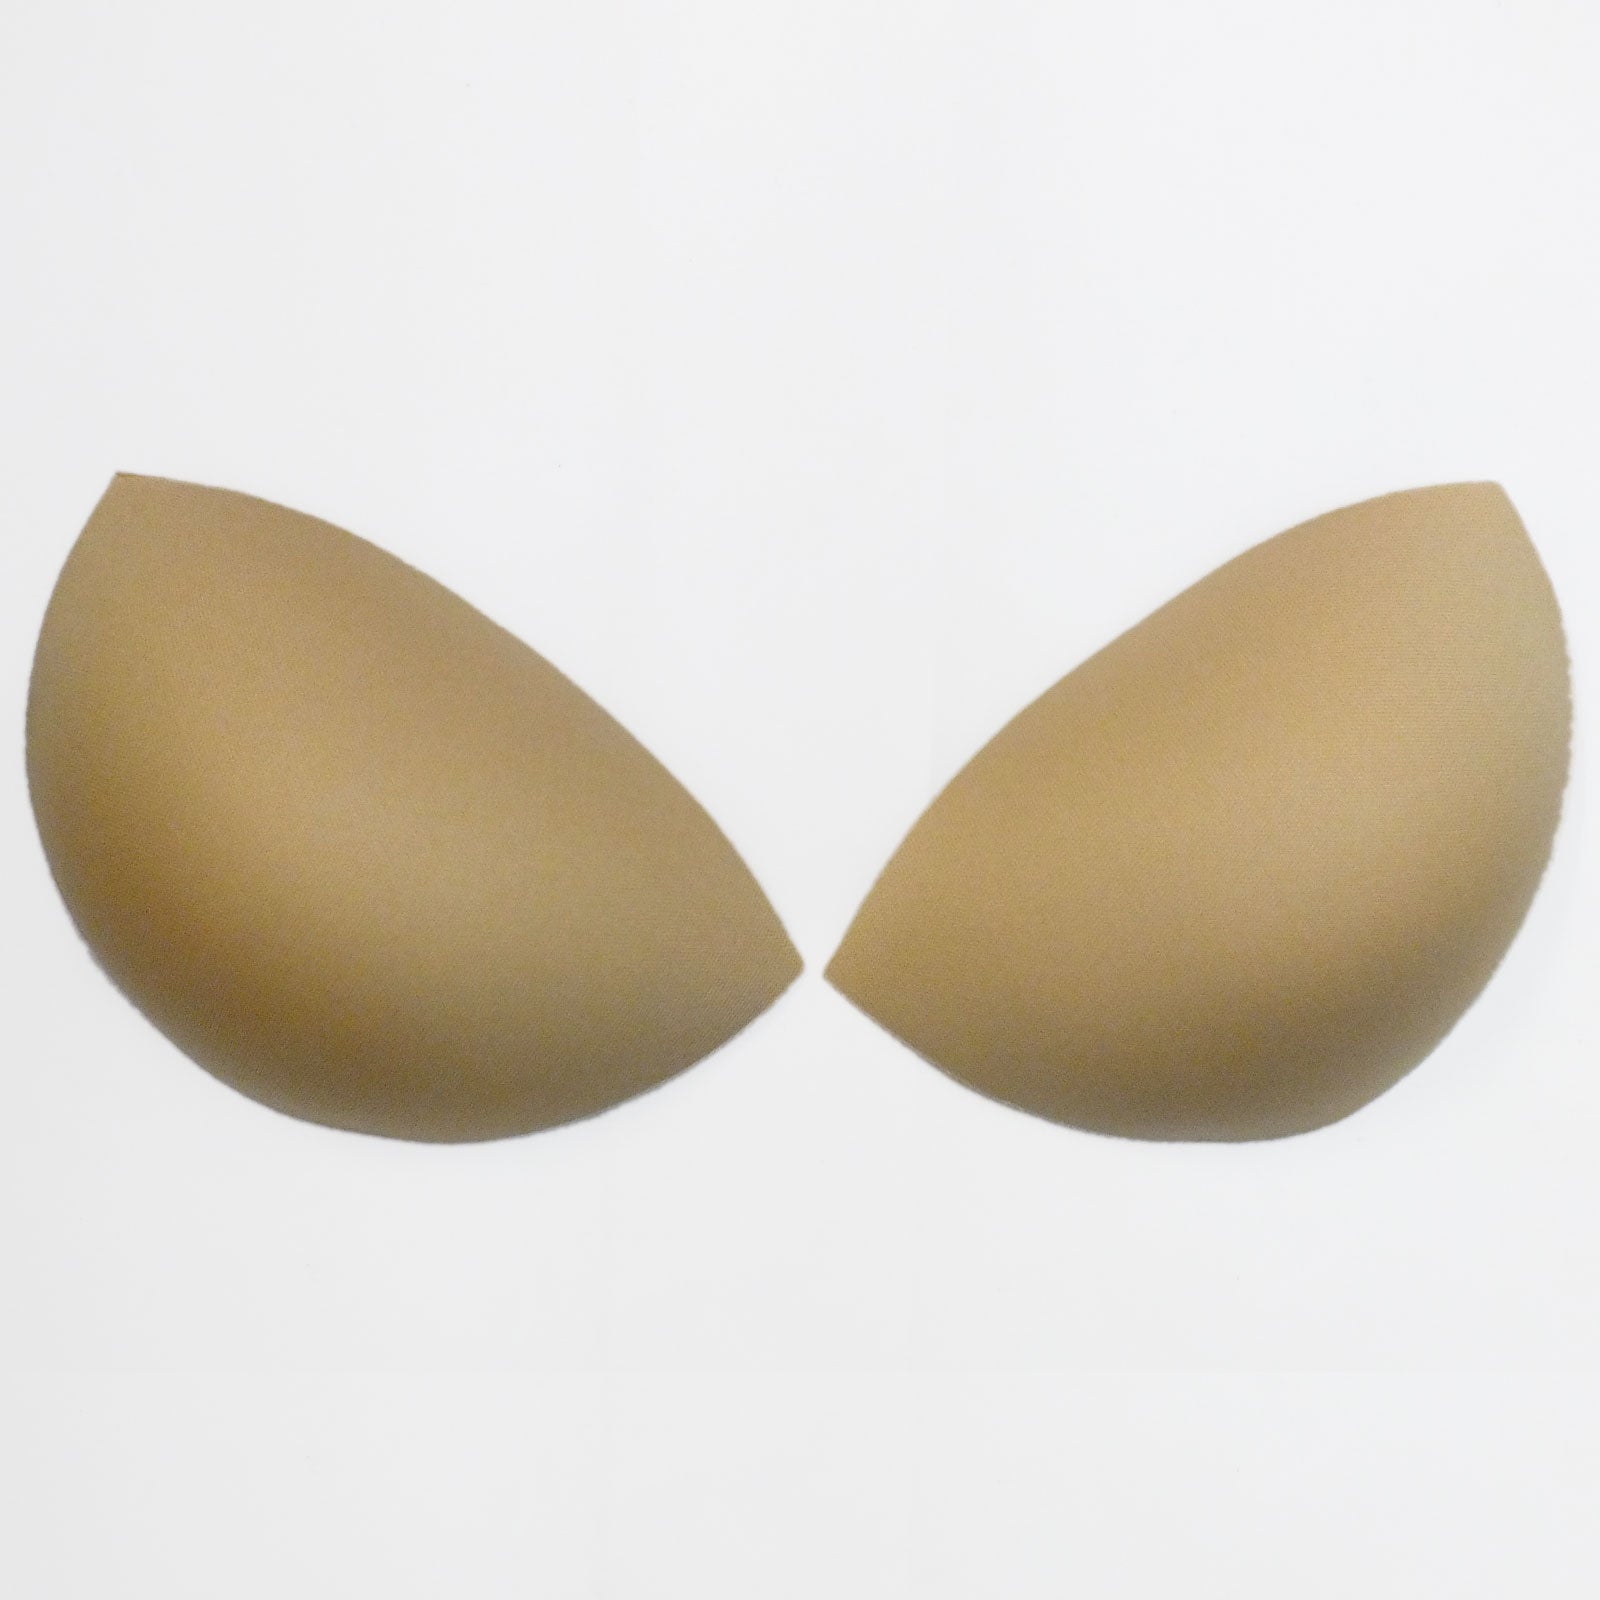 Dritz - Adhesive Bra - Size D - Nude